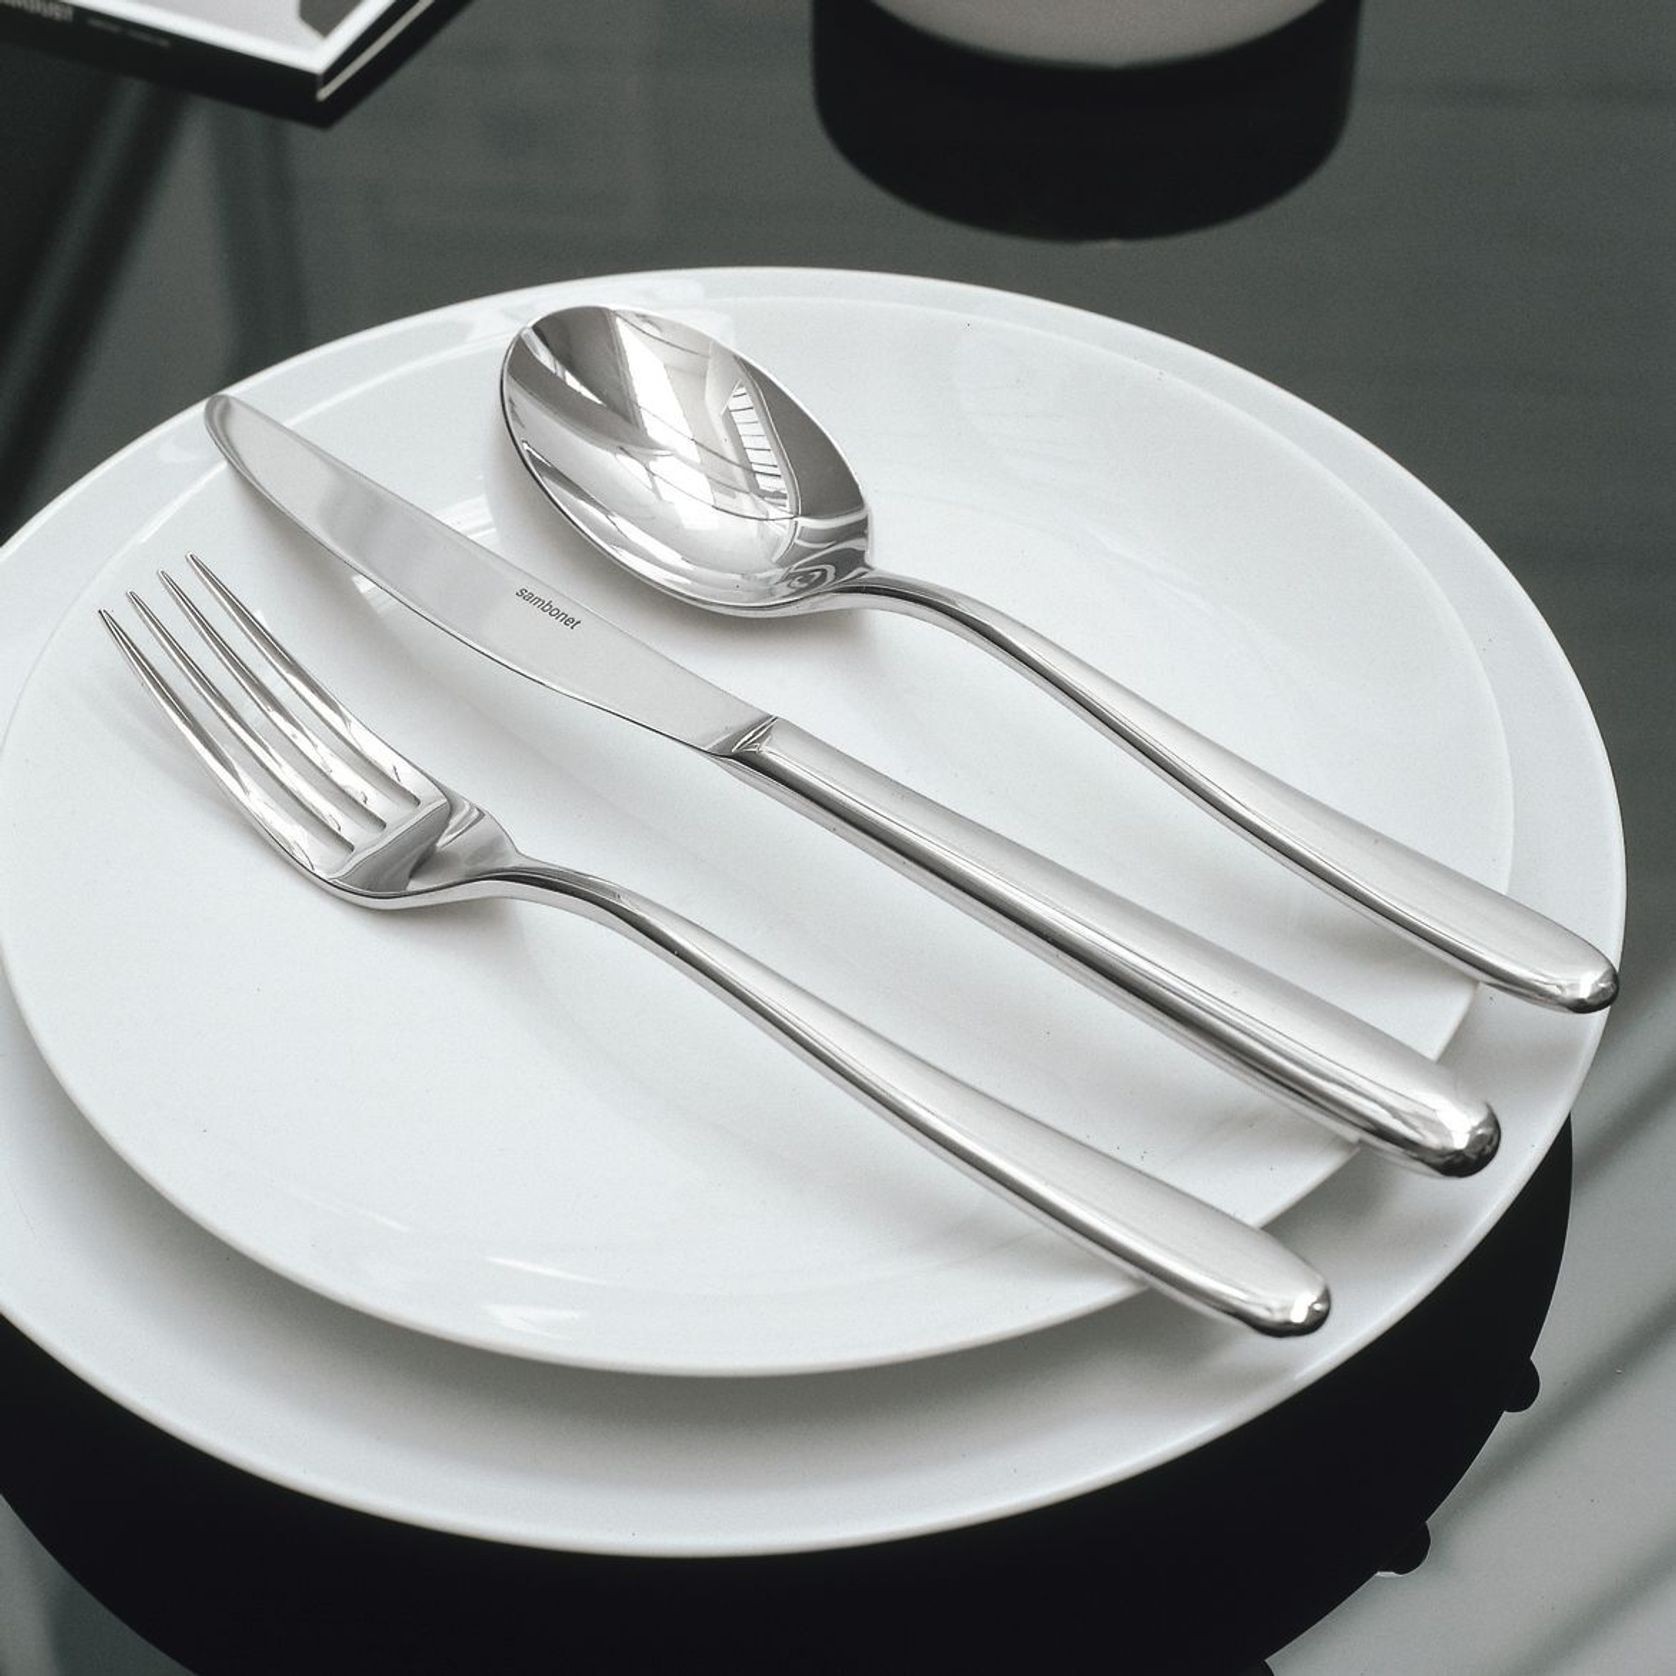 Sambonet Cutlery, Serveware and Cookware gallery detail image